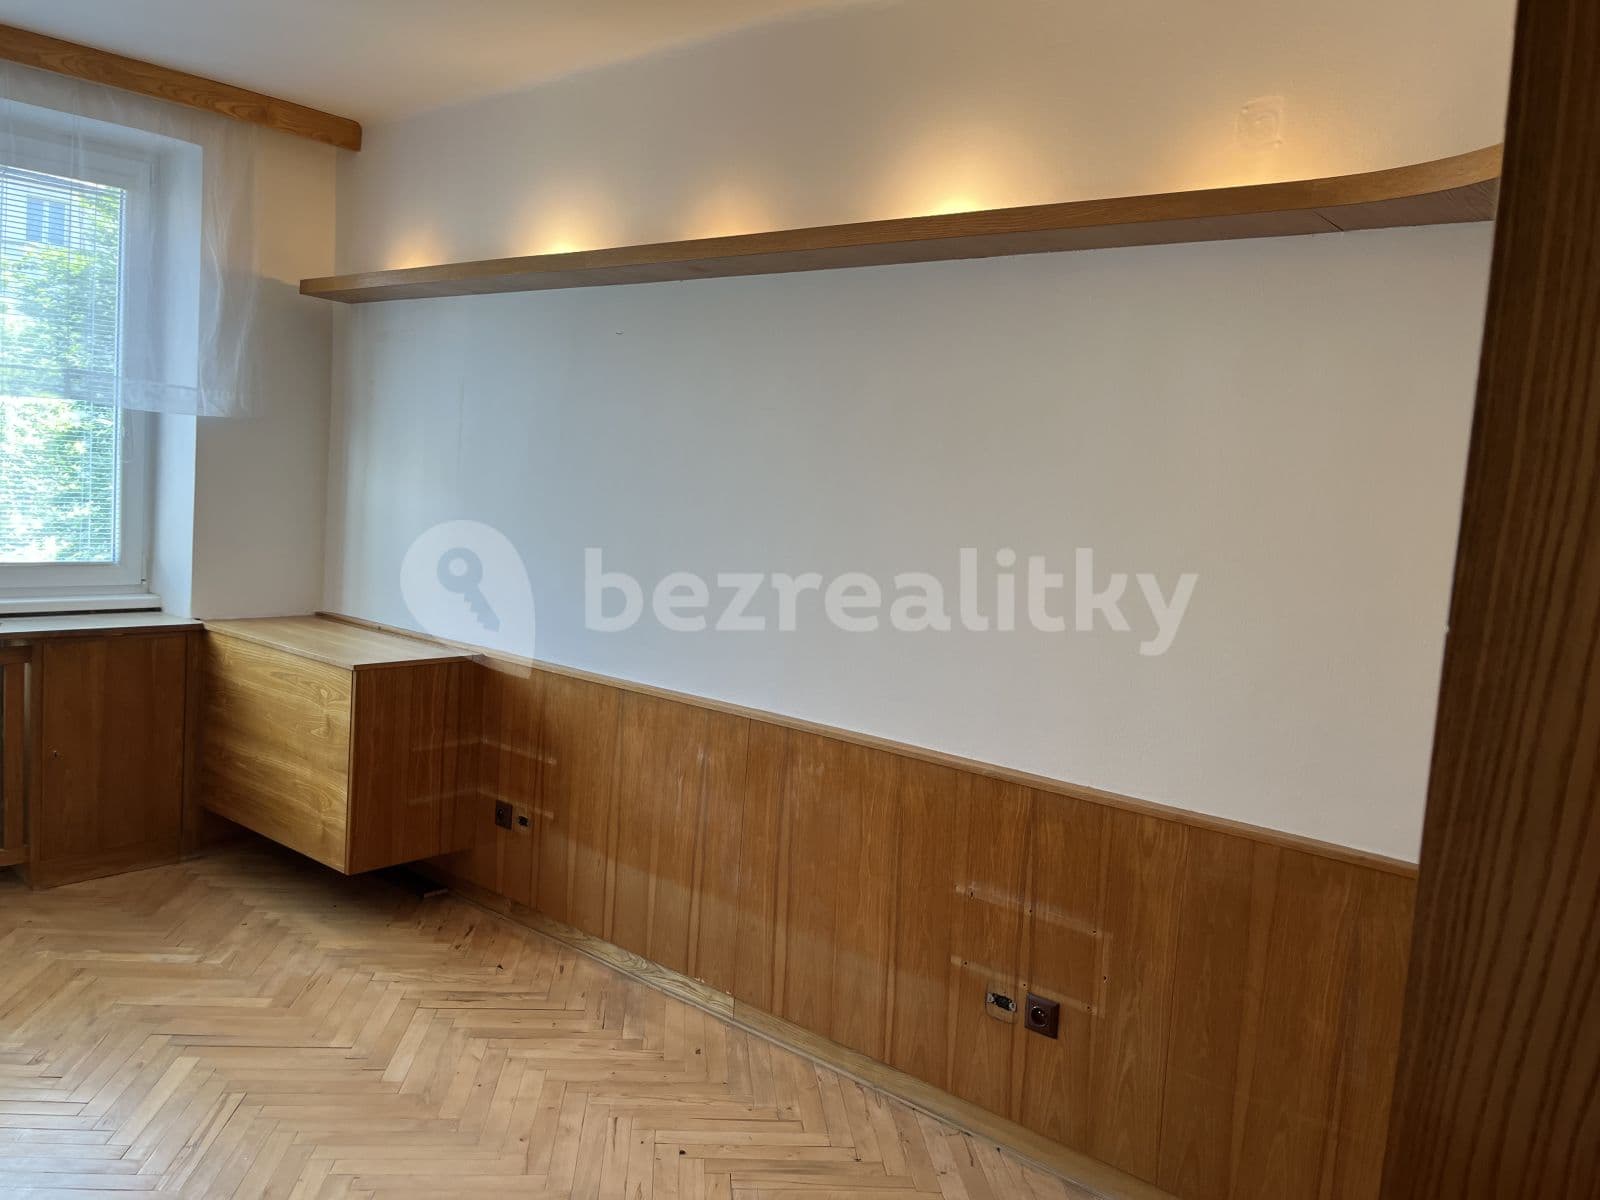 2 bedroom with open-plan kitchen flat to rent, 88 m², Hradecká, Prague, Prague